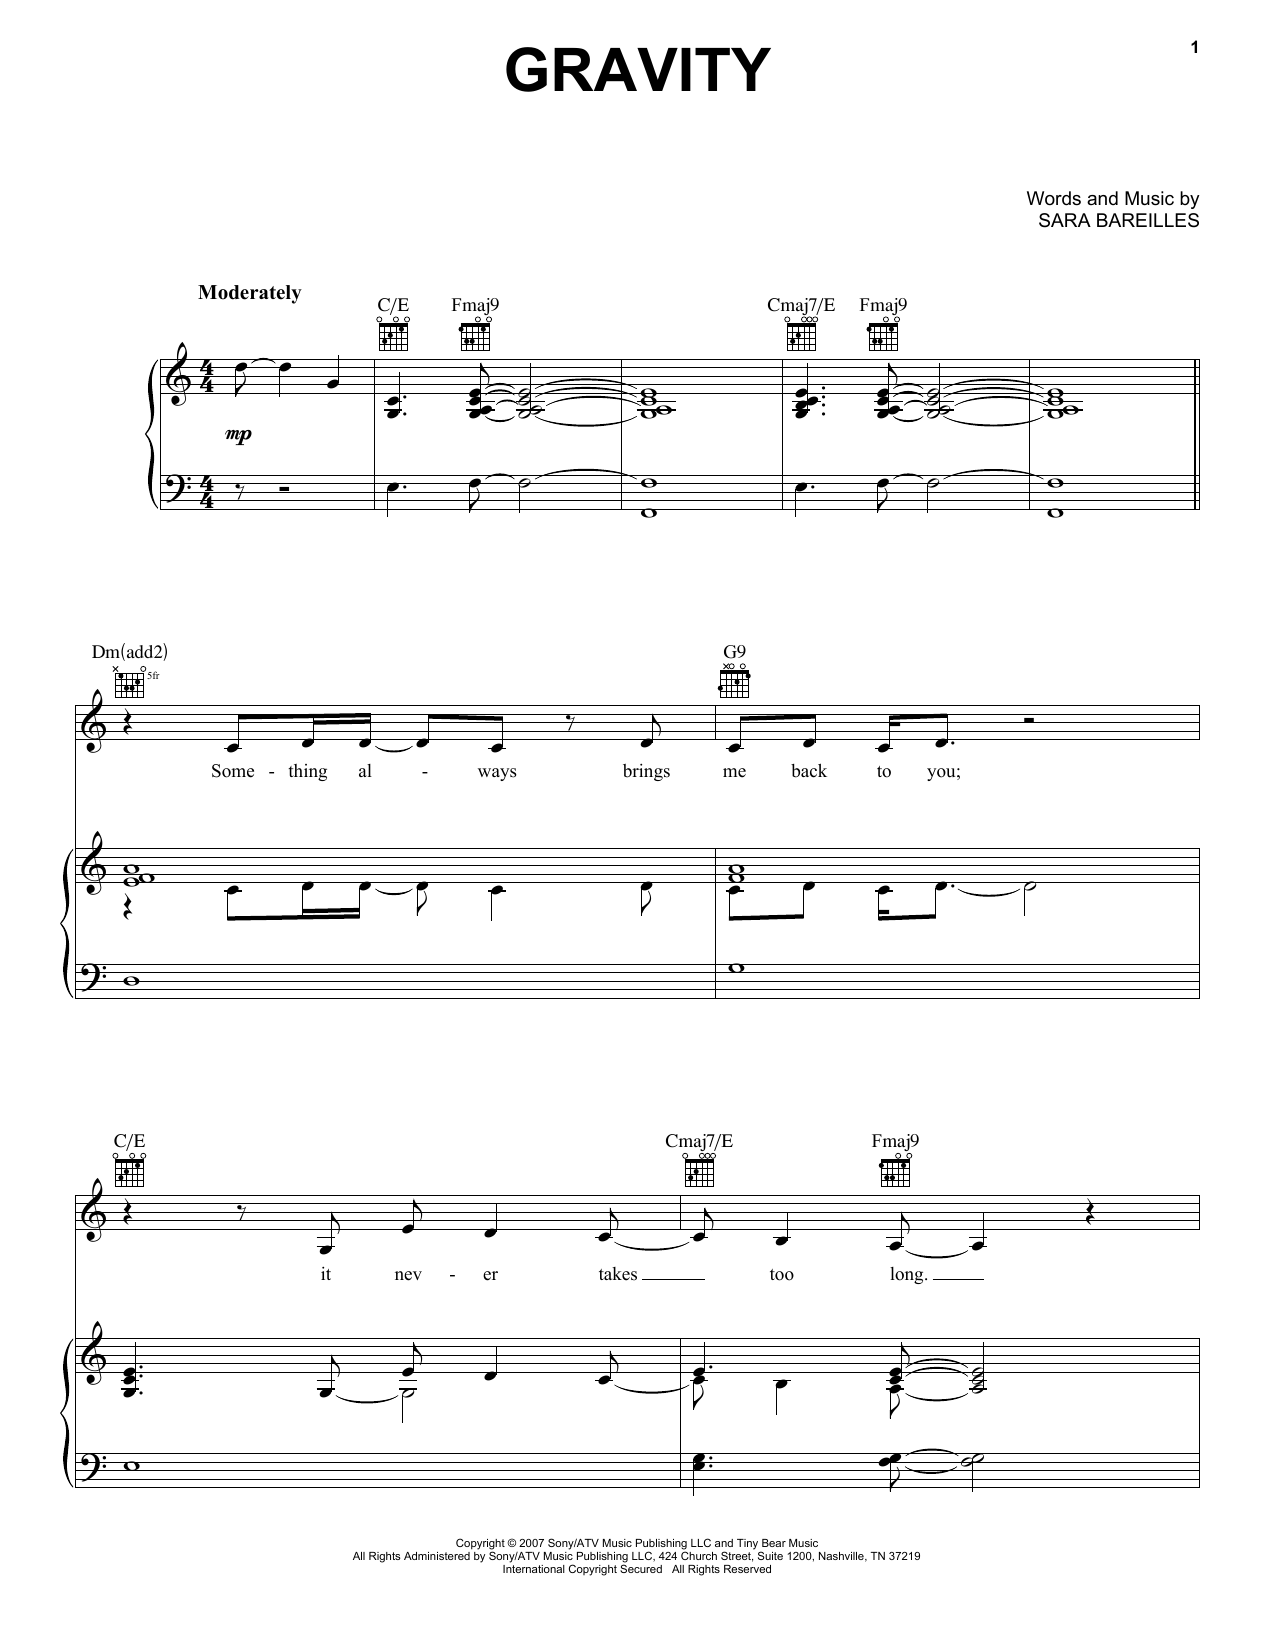 Sara Bareilles Gravity Sheet Music Notes & Chords for Piano (Big Notes) - Download or Print PDF